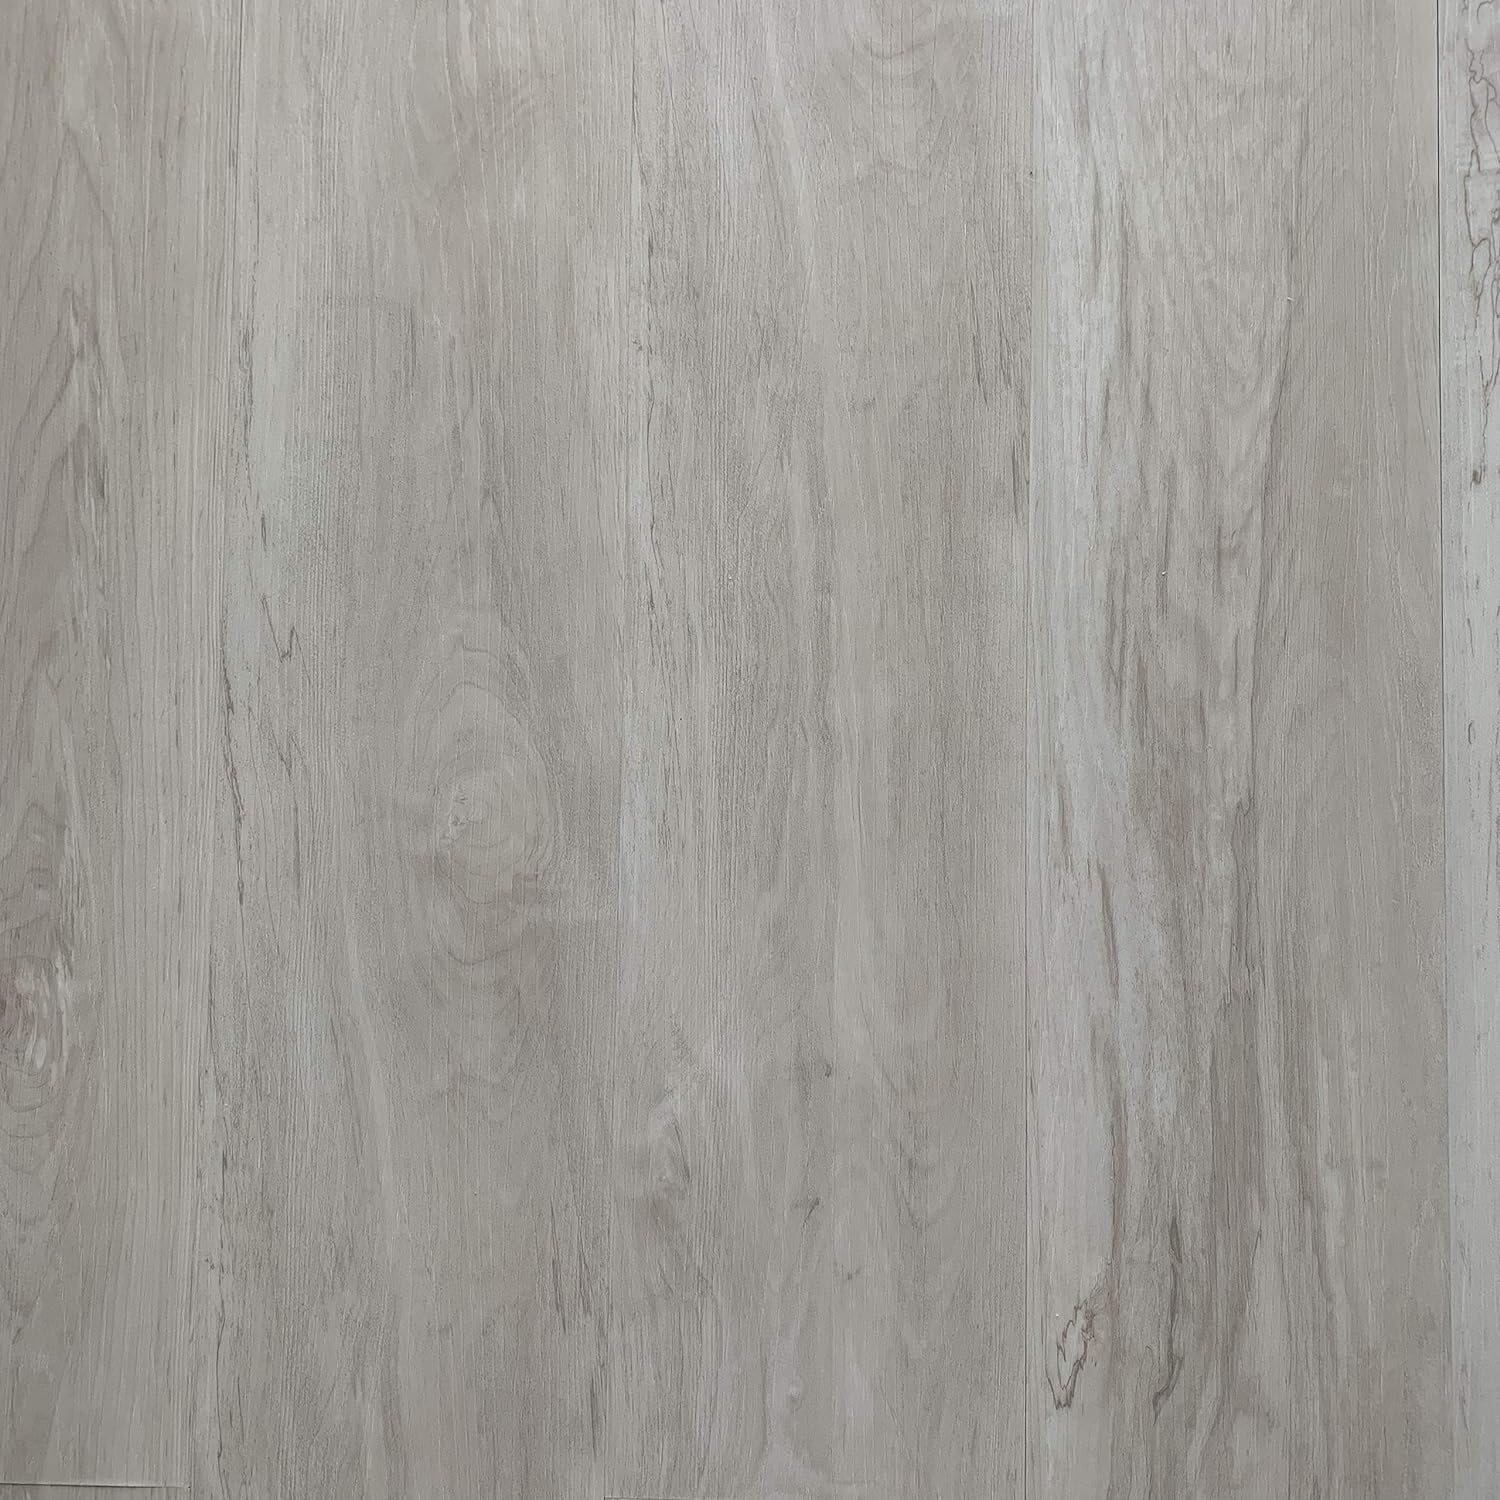 Luxury Vinyl Plank Flooring Spc White, Quick Lock Vinyl Flooring